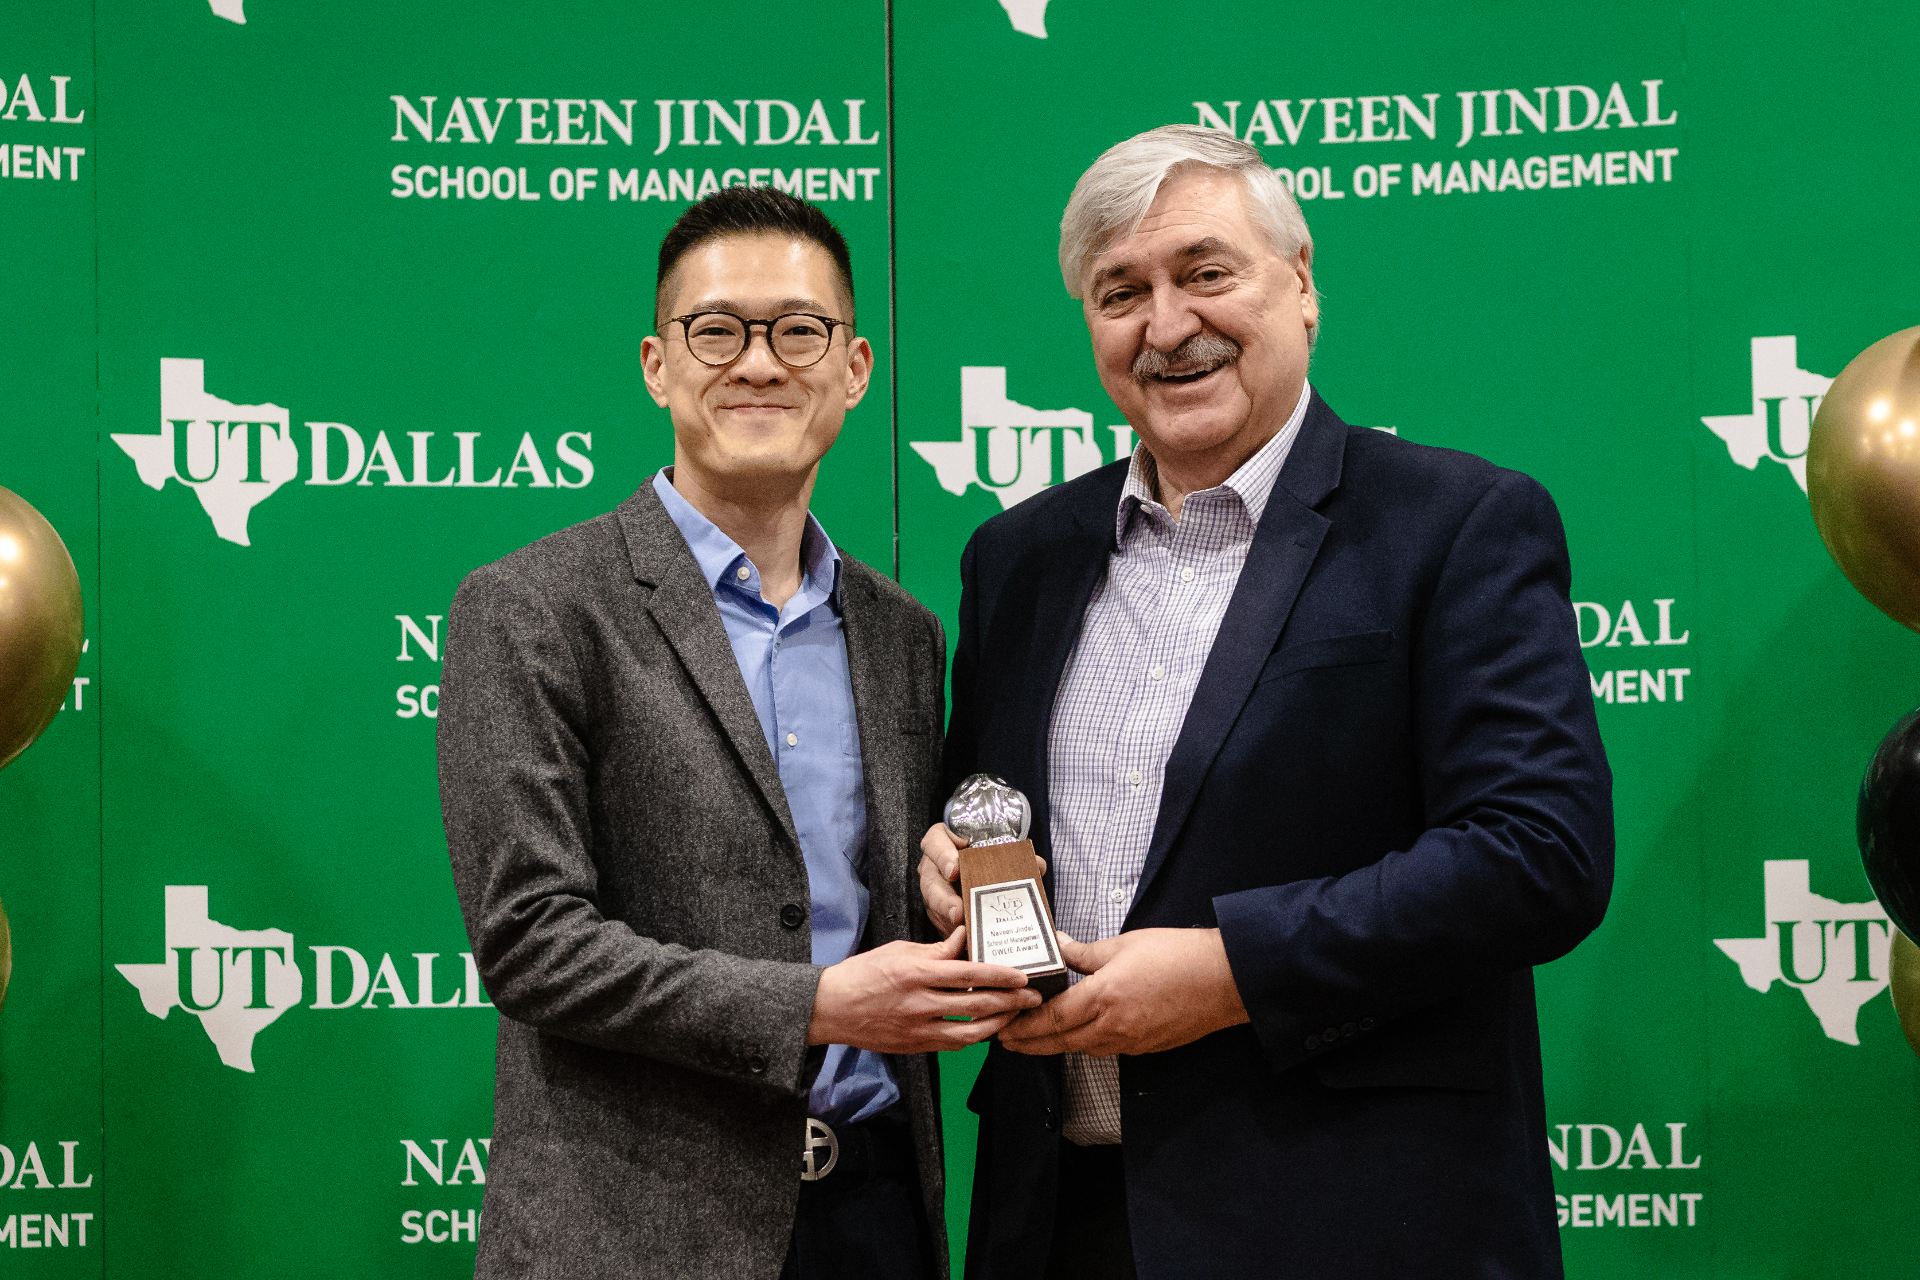 Dean Pirkul presents PhD Faculty of the Year OWLIE award to Steven Xiao.